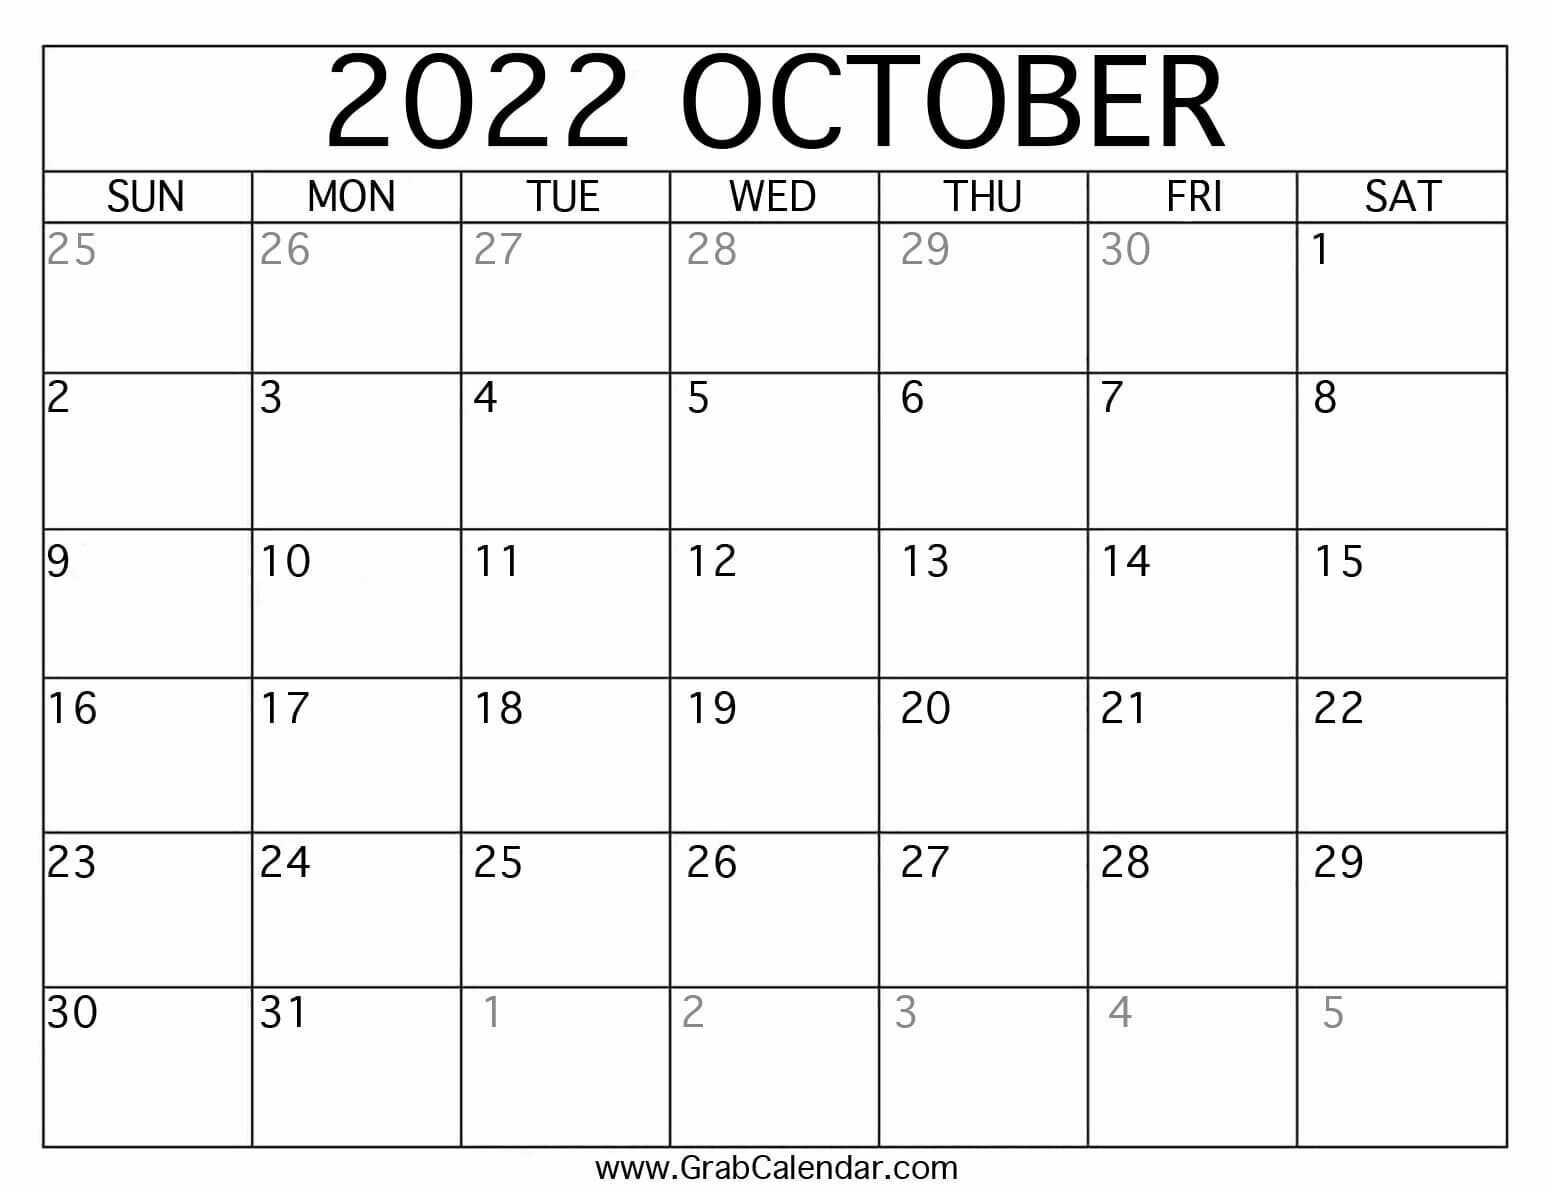 Avatar: October 2022 Calendar